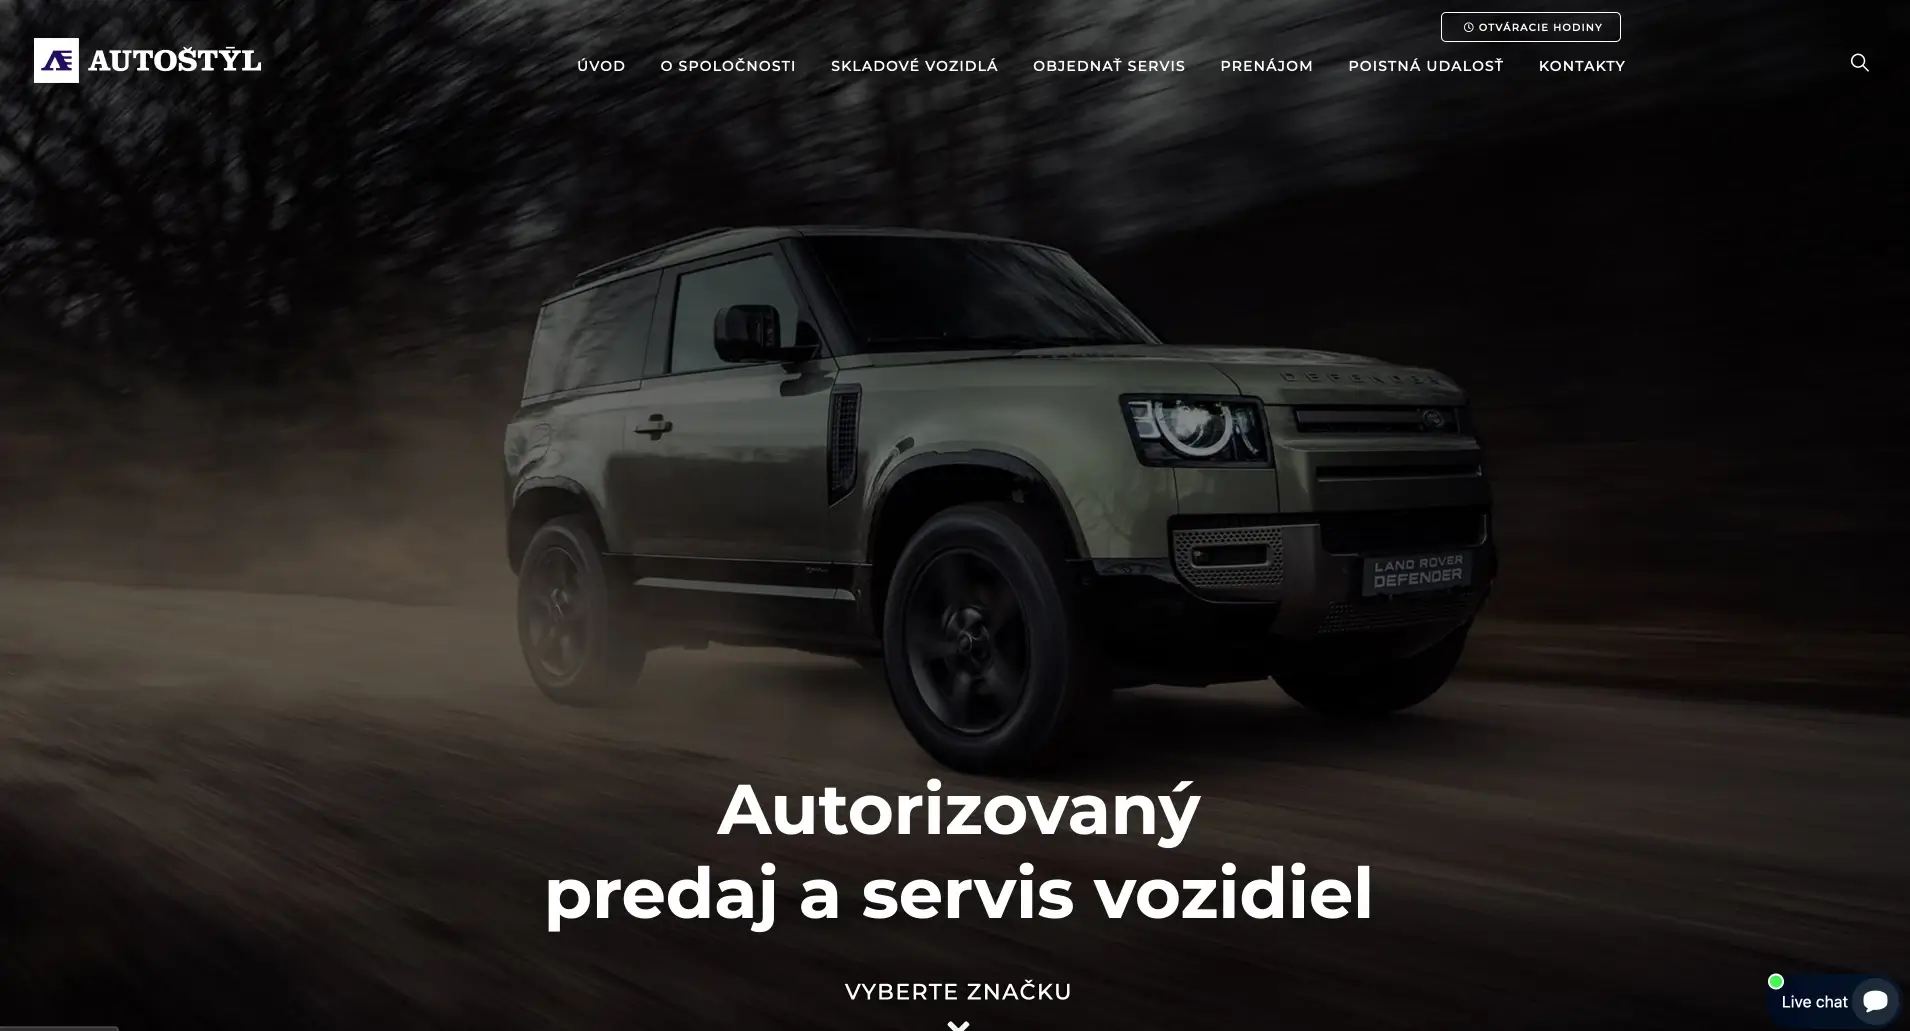 Autoštýl - Authorized Vehicle Sales and Service